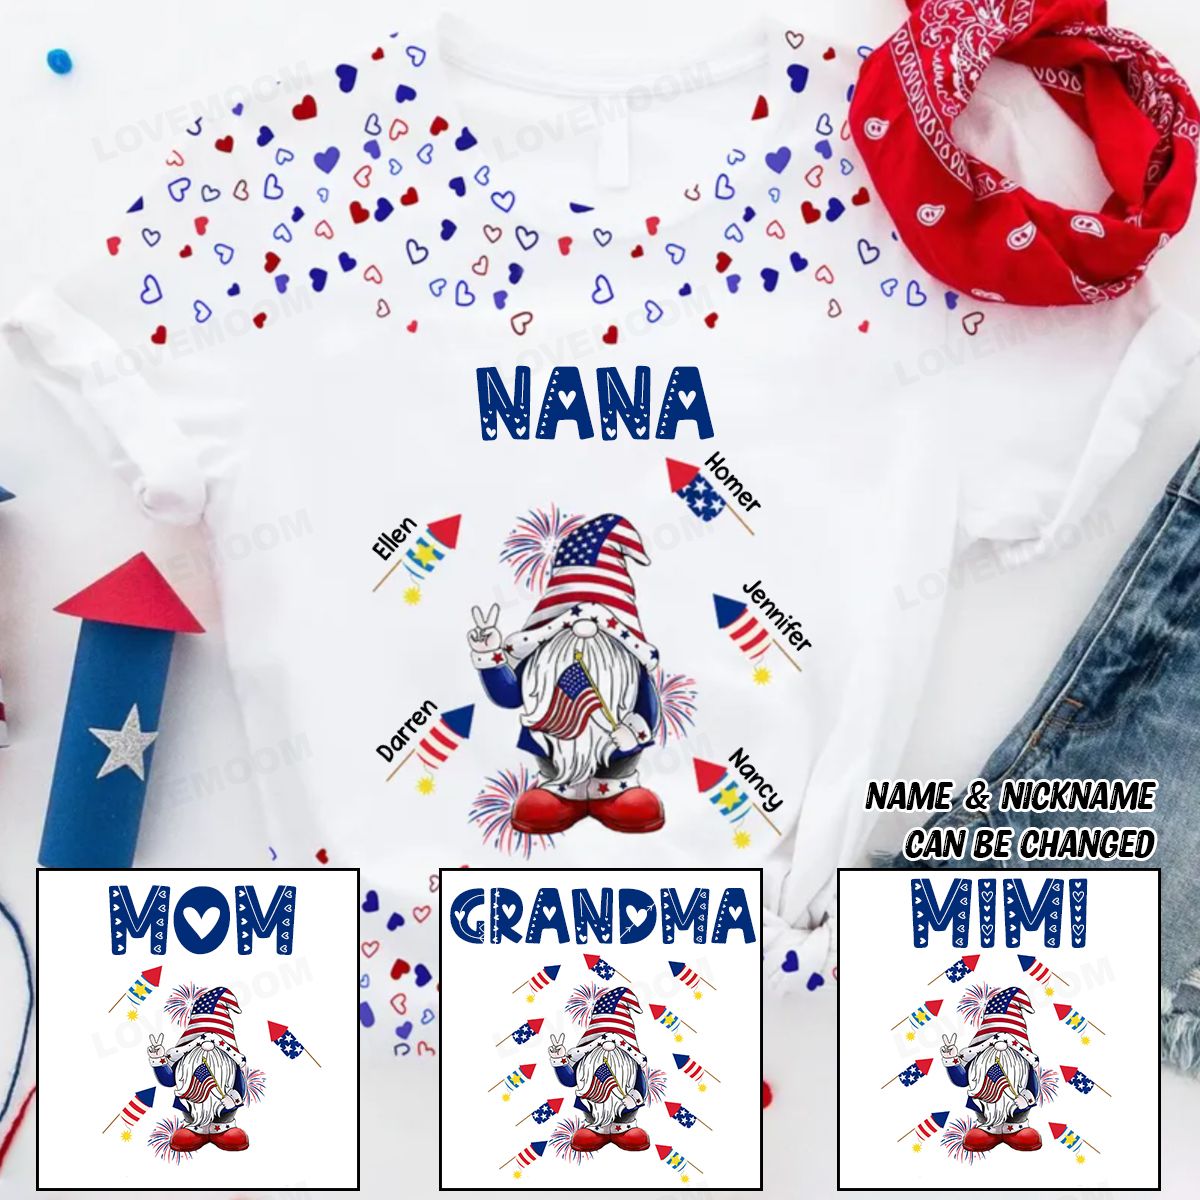 Grandma Mom Nana Firecrackers Kids 4th July Personalized T-shirt